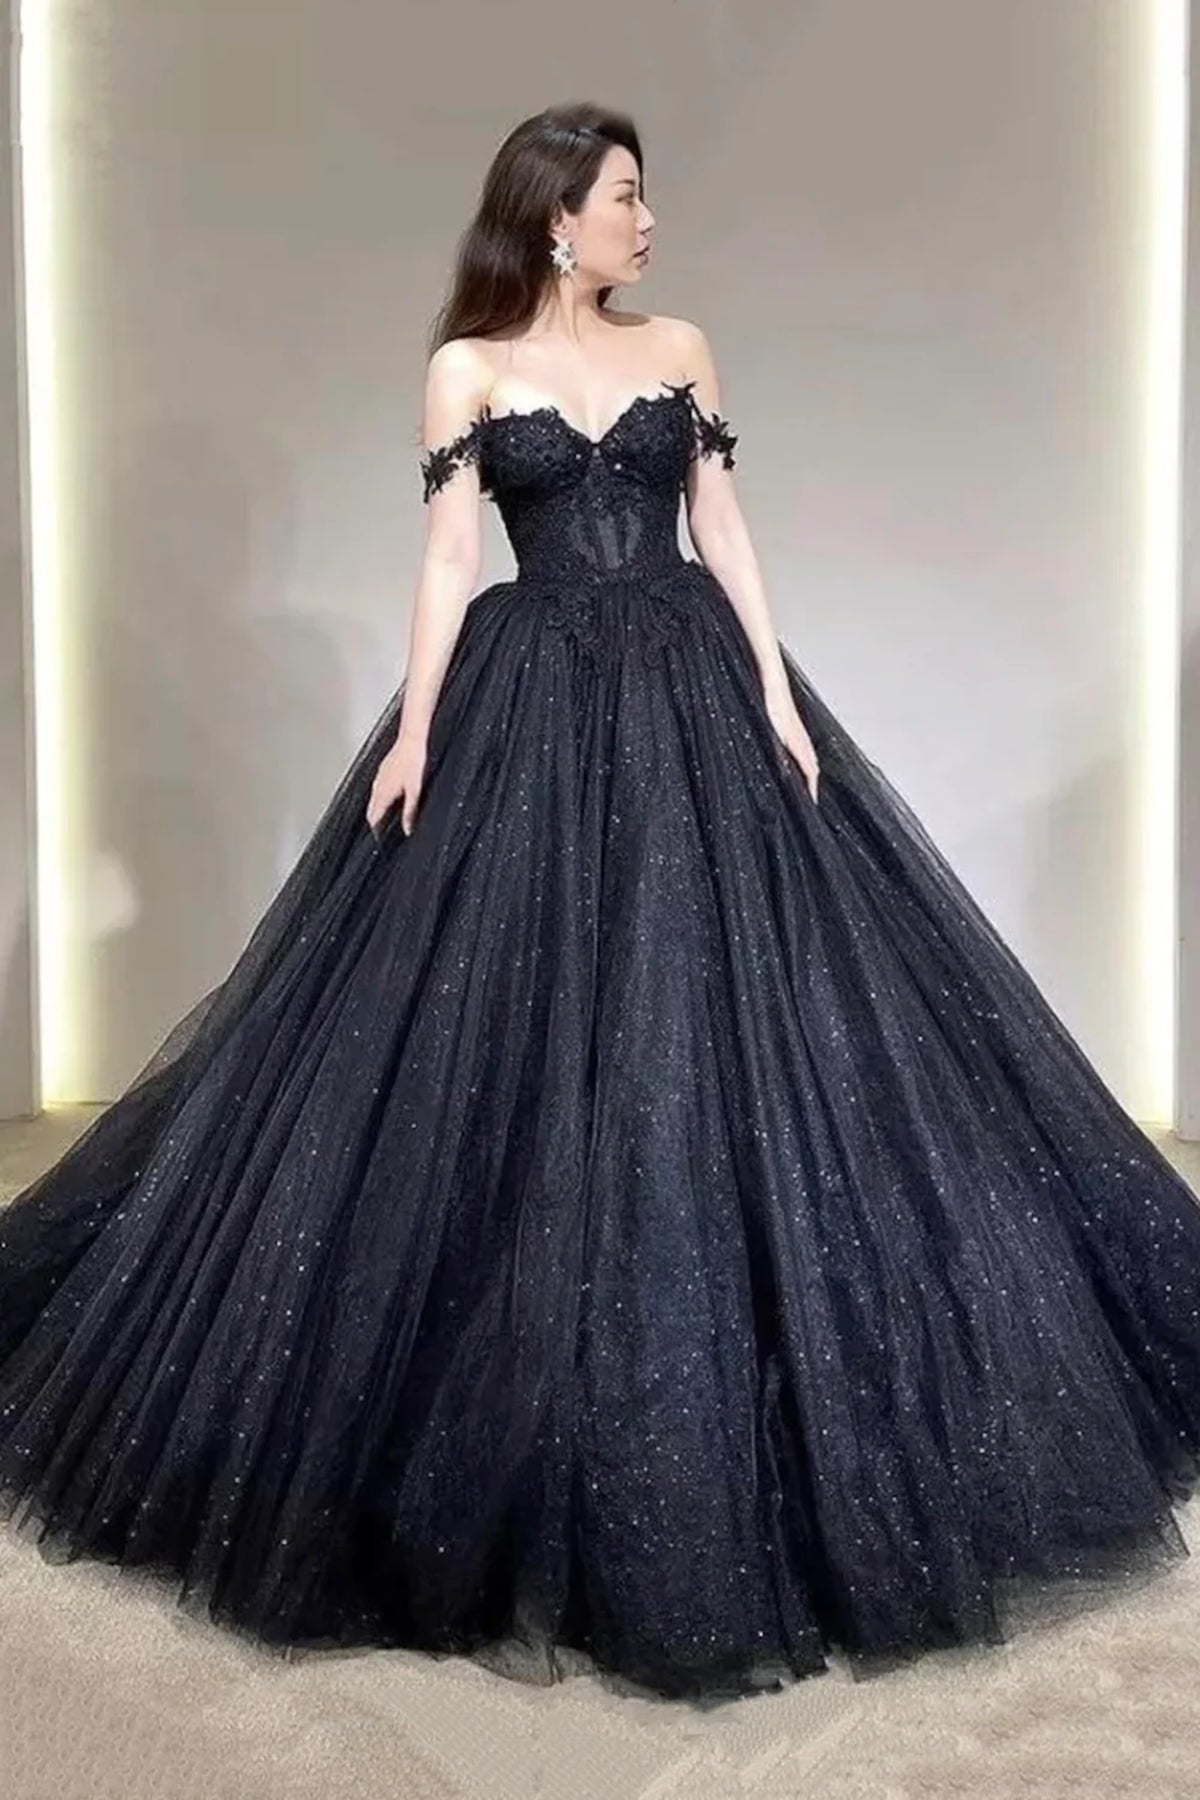 Good Looking Lace Border Black Gown With Plain Dupatta – Amrutamfab